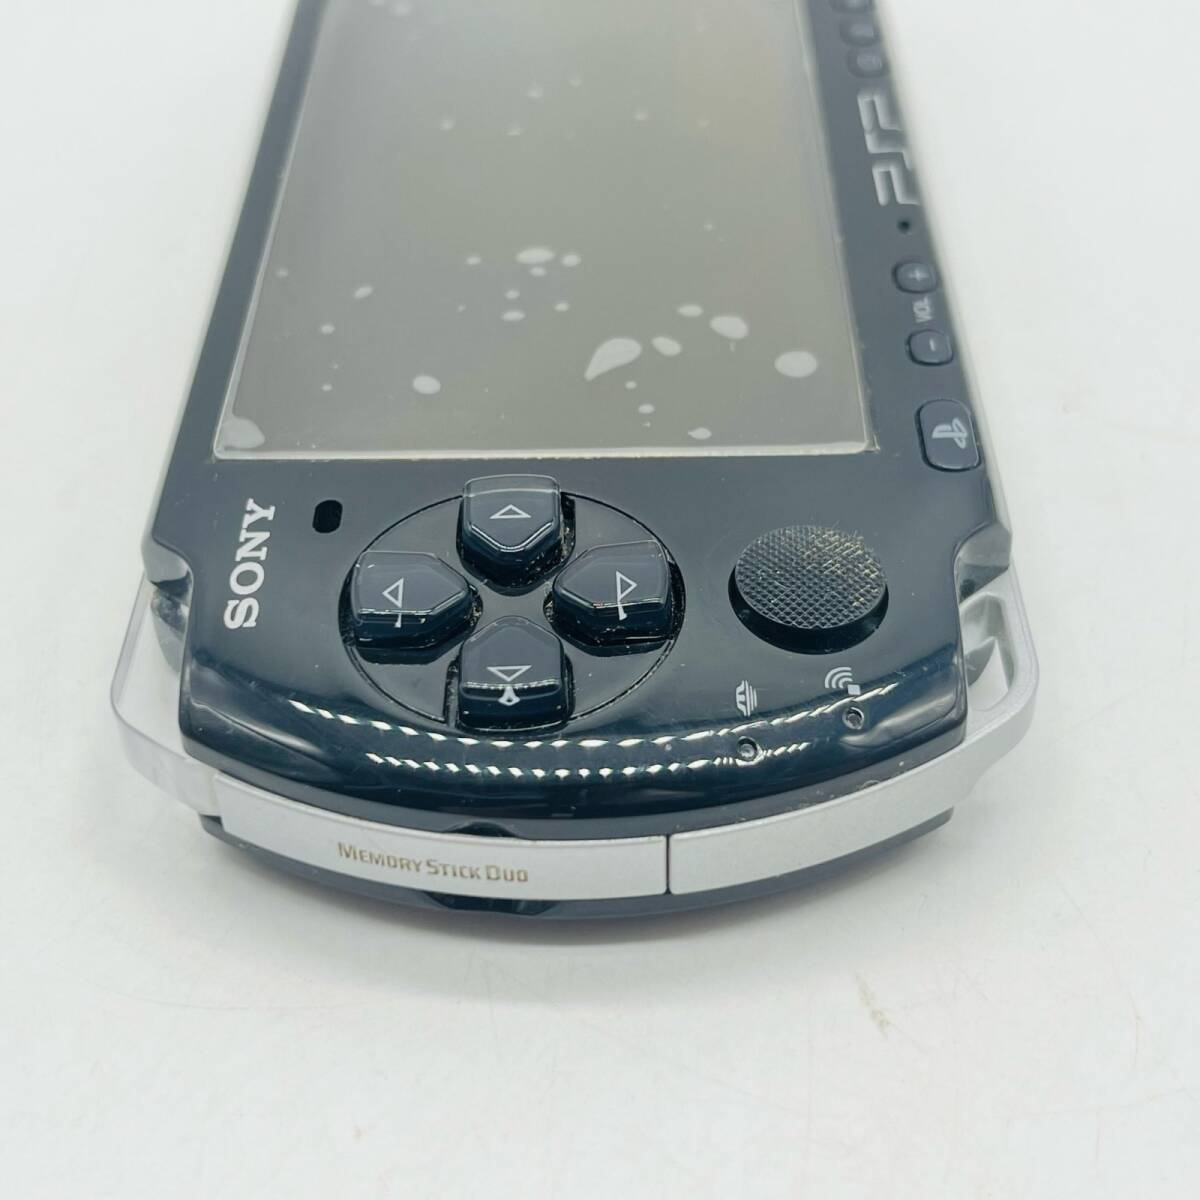 PSP 3000 SONY ソニー ブラック 黒 Playstation プレイステーション Portable ポータブル ゲーム機 本体 アダプター 現状品 中古品 7837